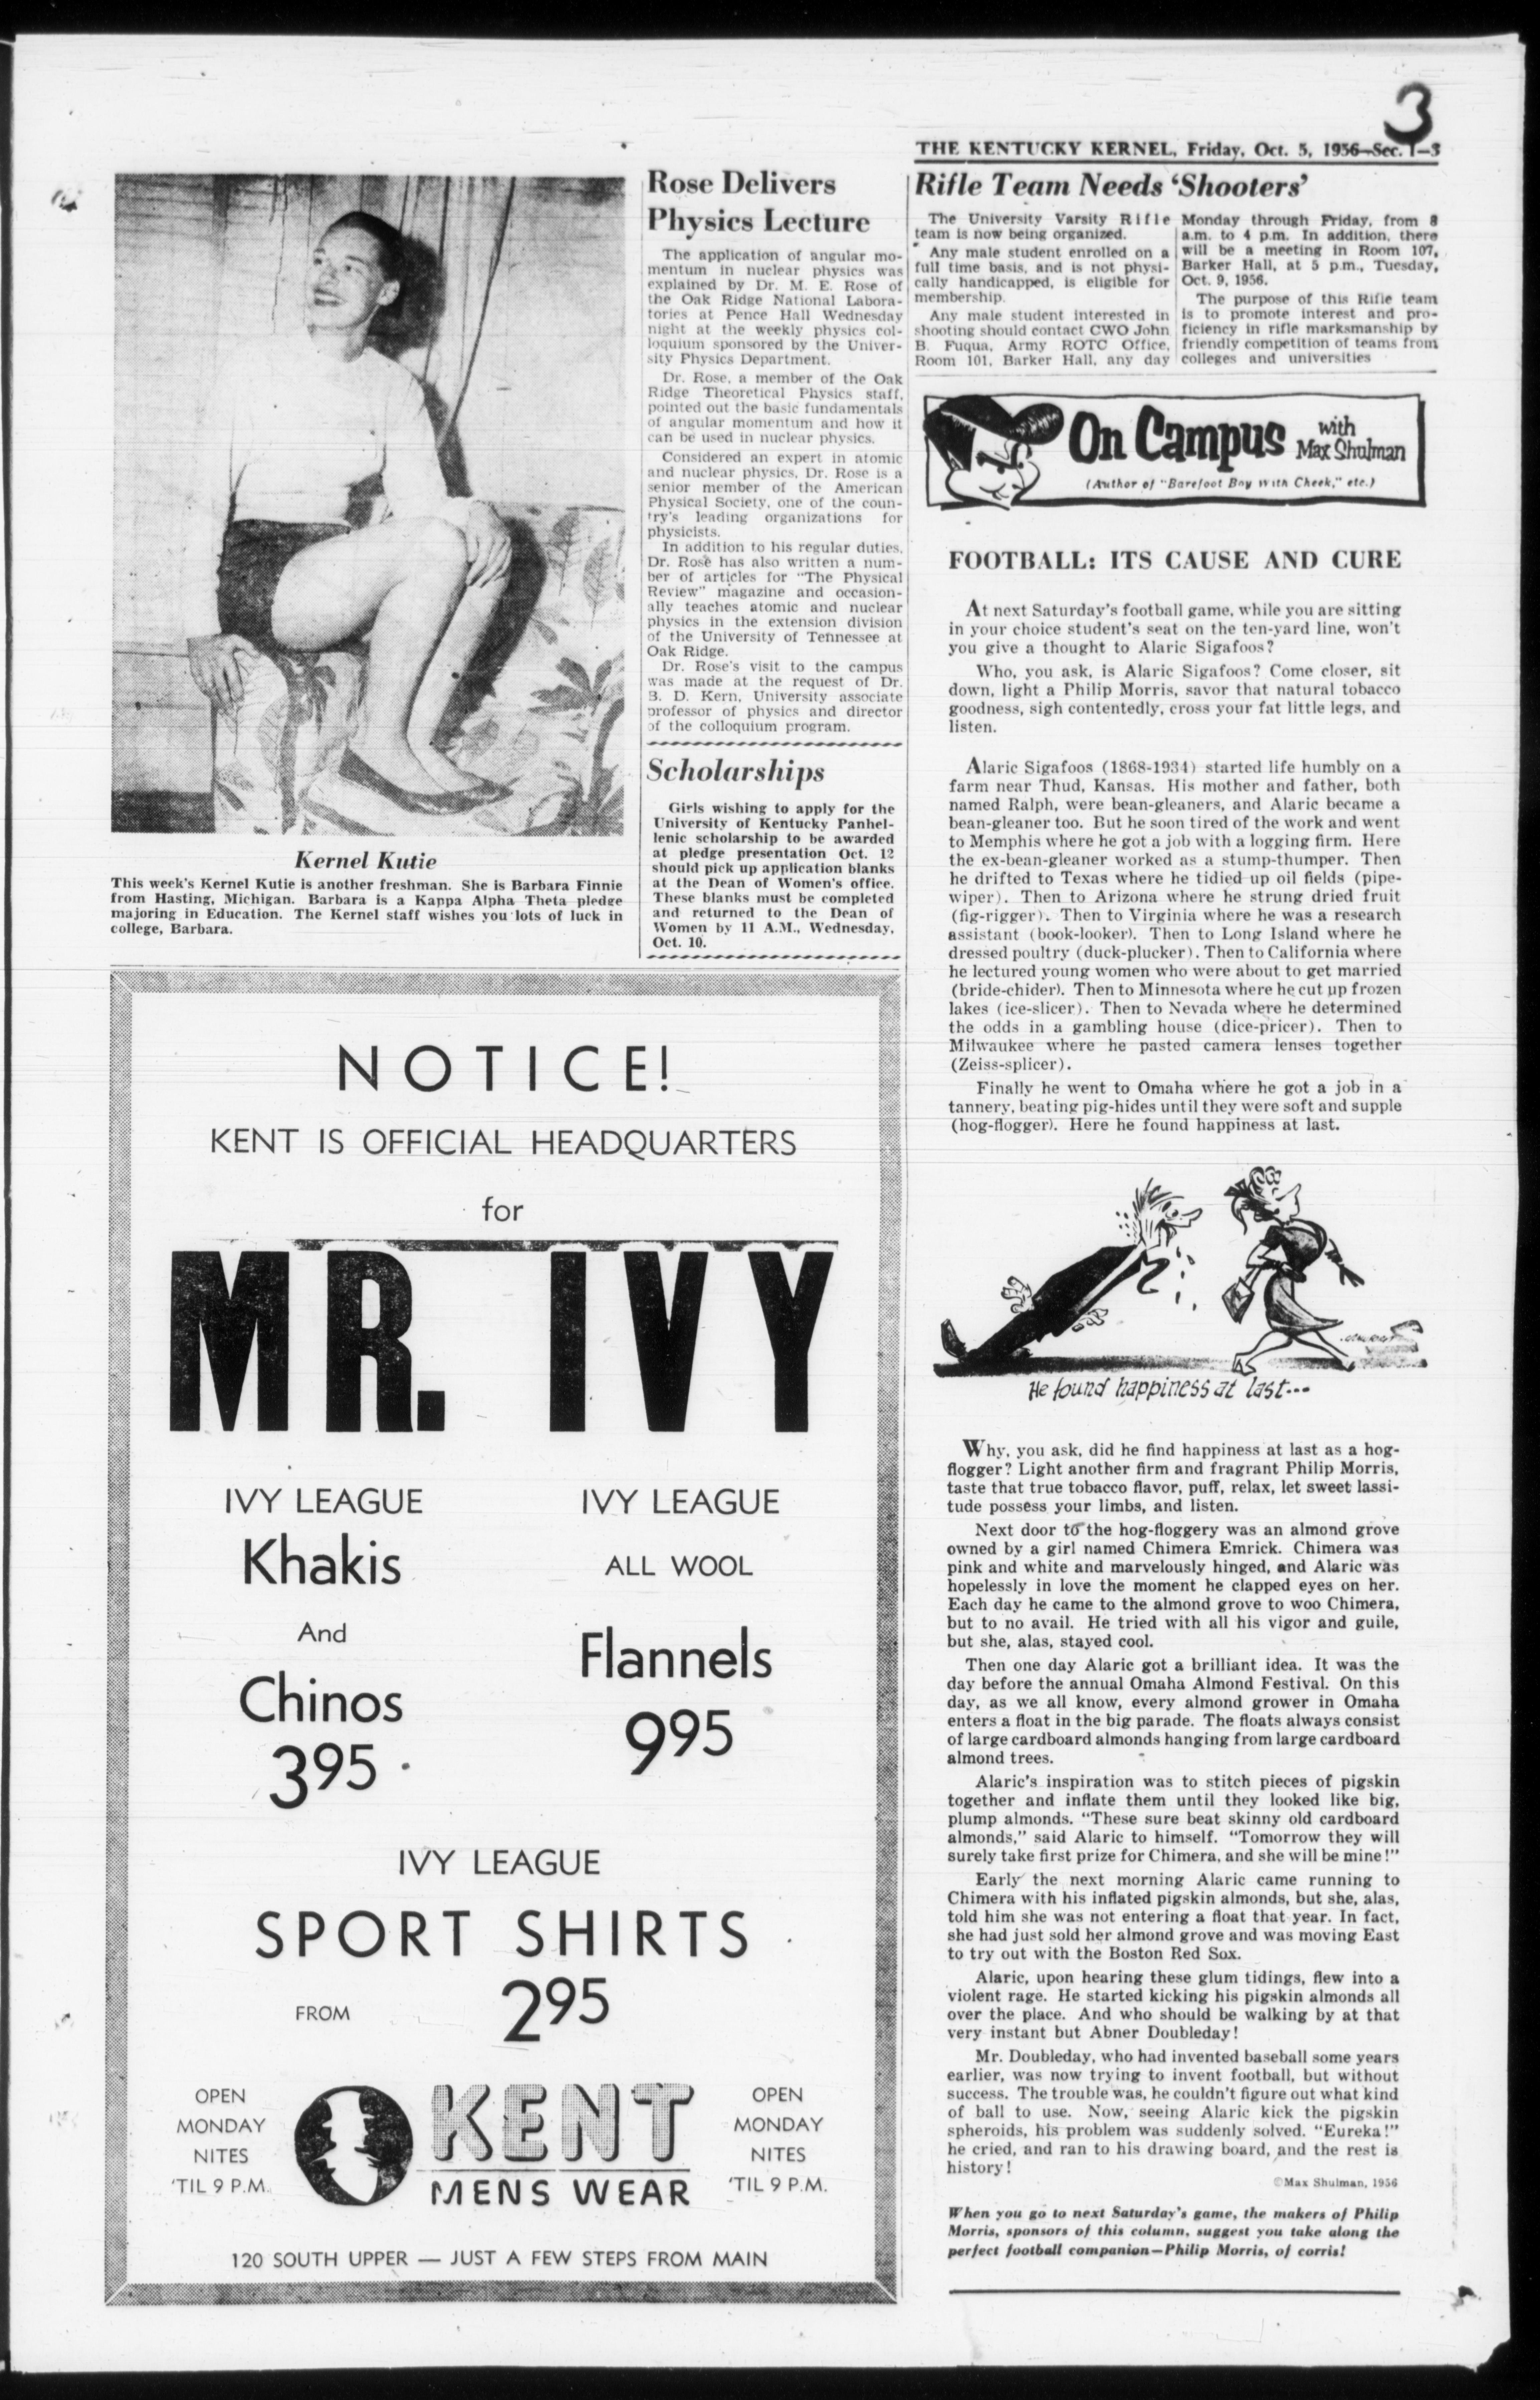 The Kentucky Kernel, October 5, 1956